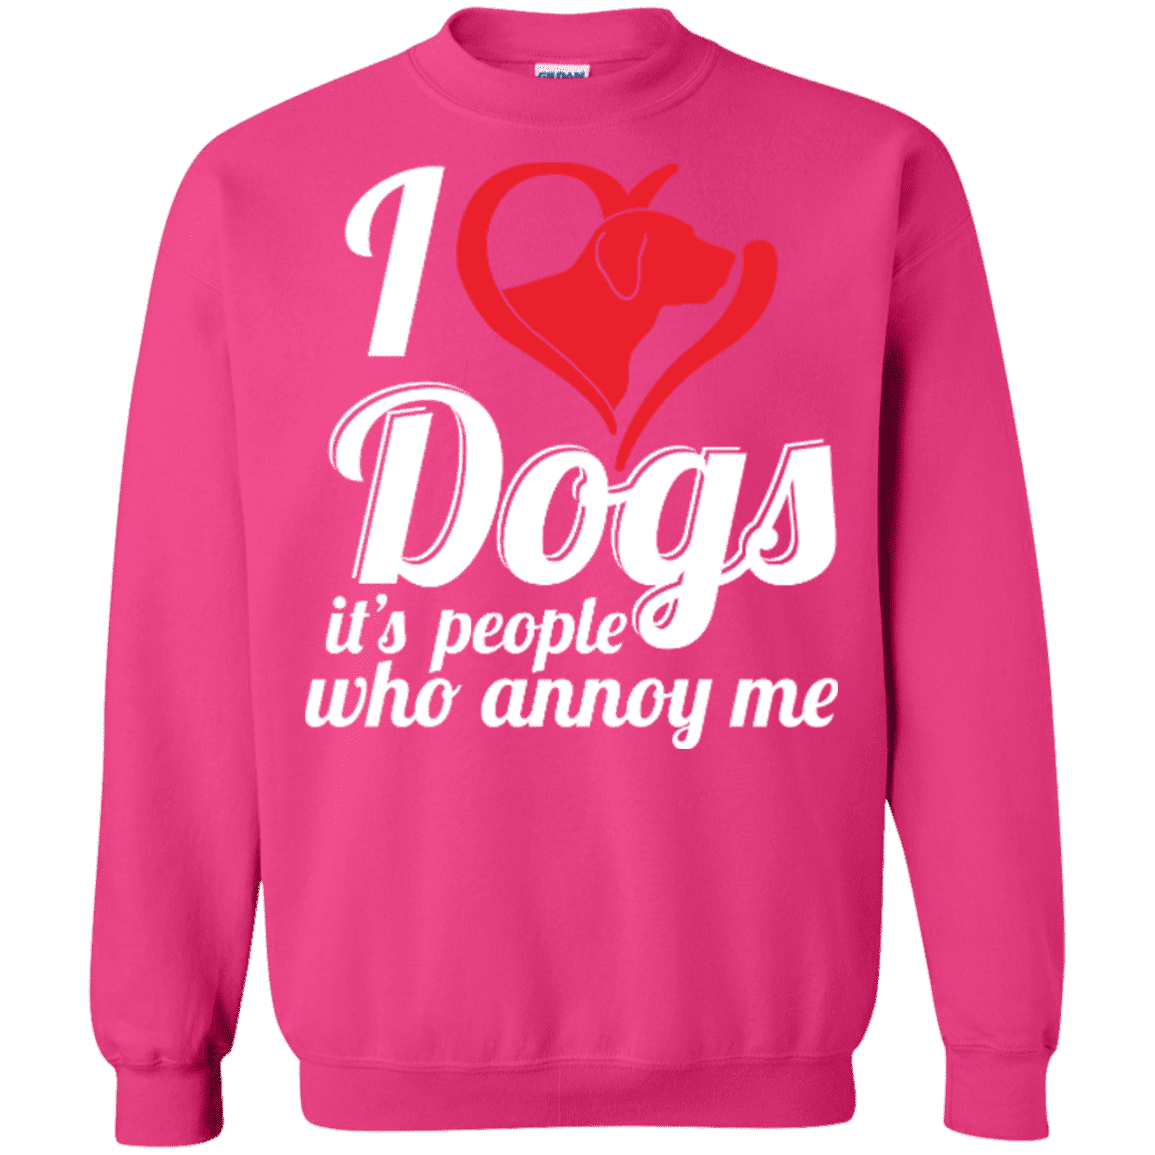 I Love Dogs - Sweatshirt.